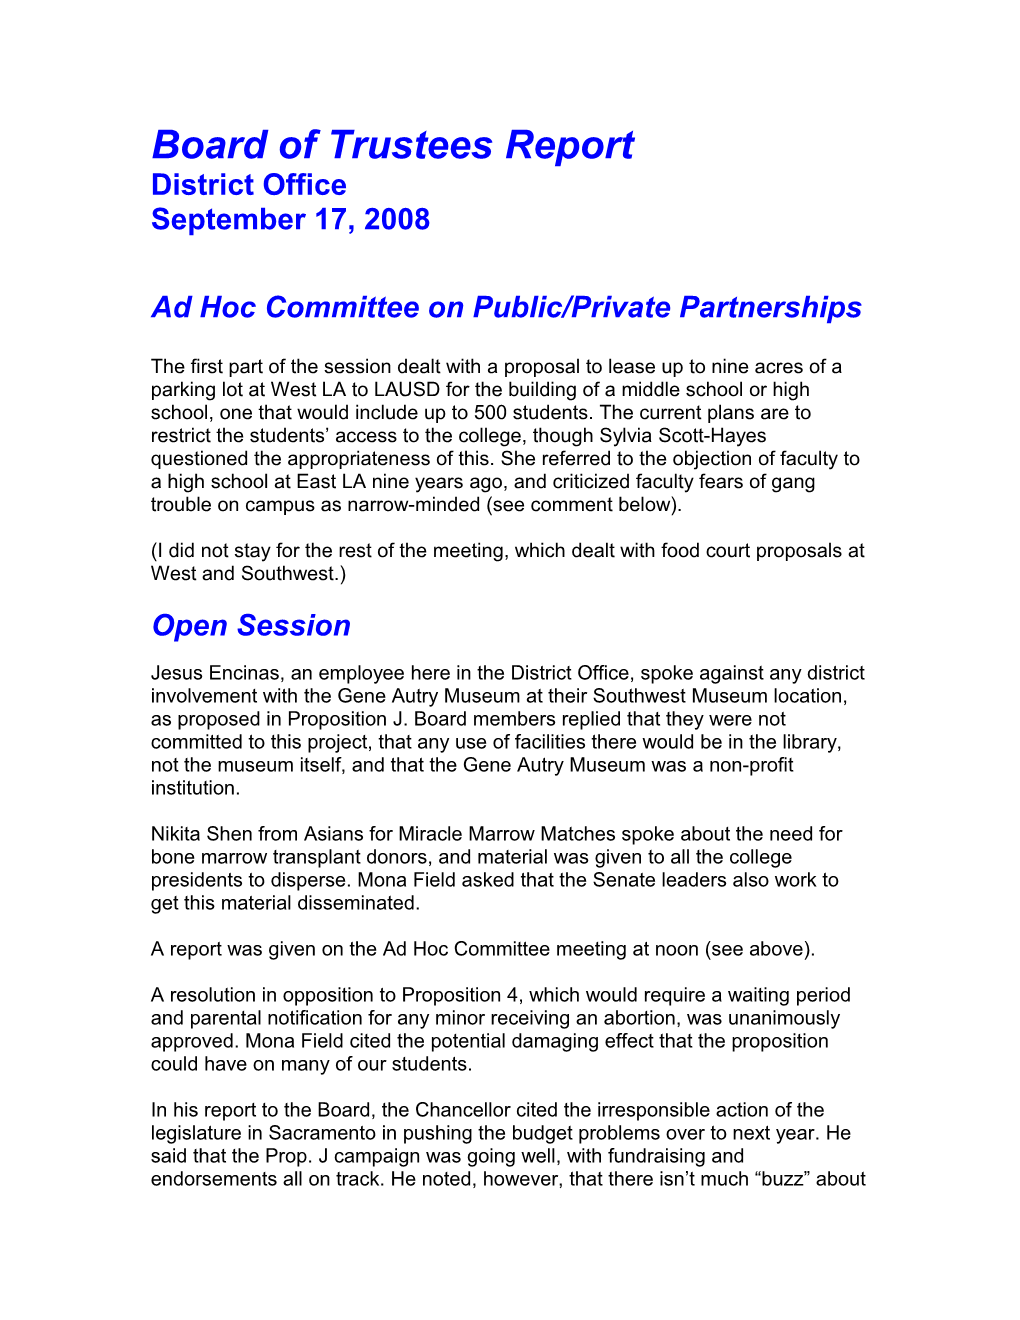 Board of Trustees Report s6